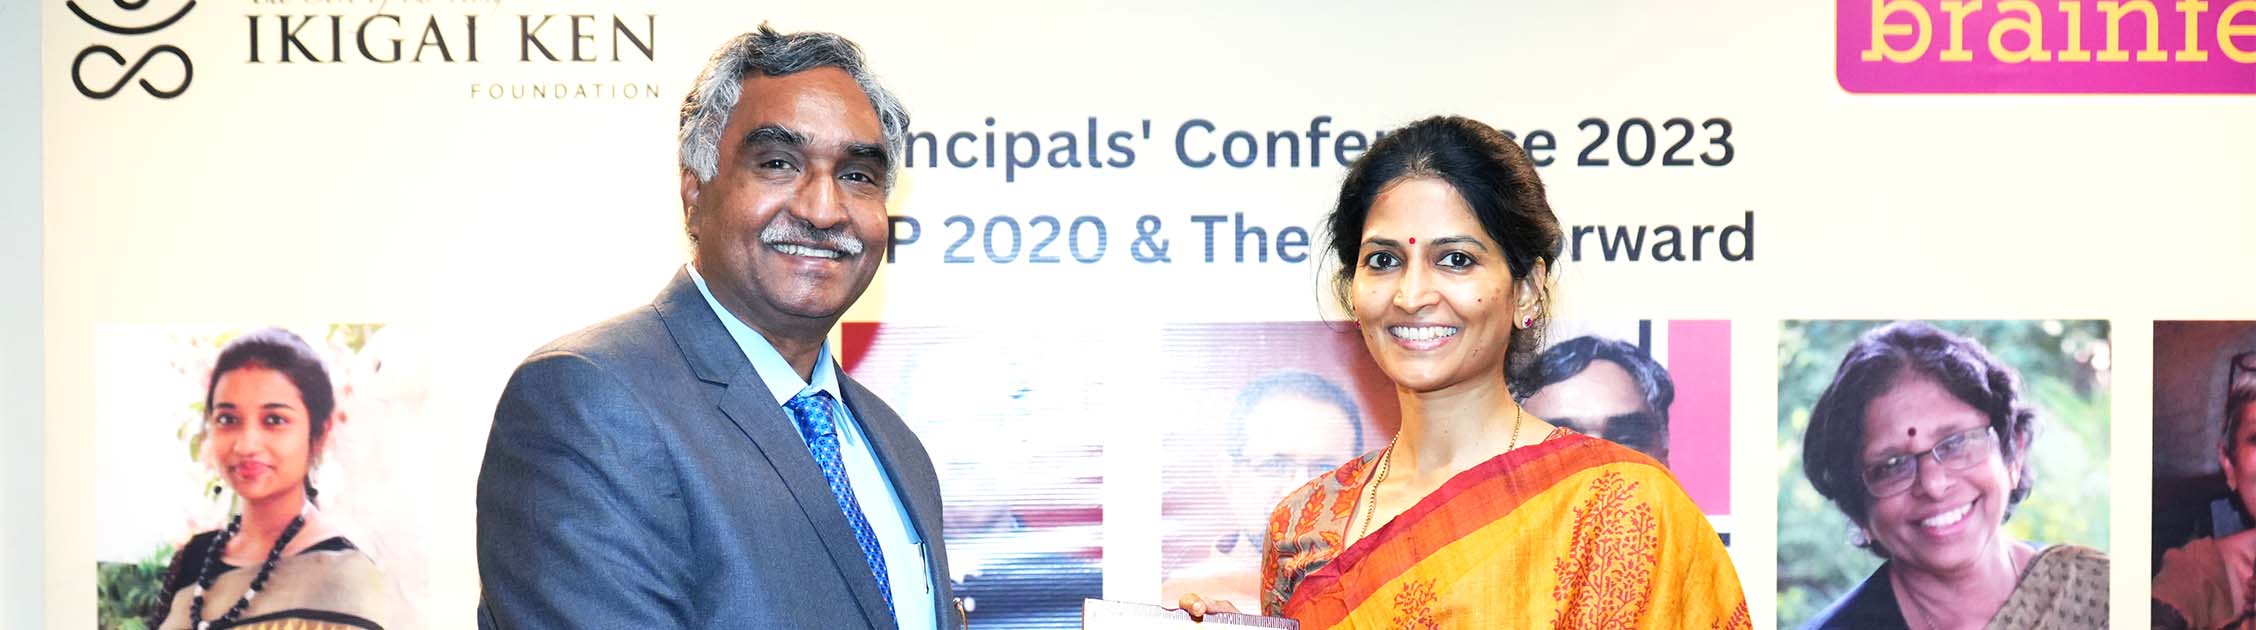 Ikigai’ken Foundation Hosts Prestigious Principals’ Conference Featuring Our CEO Shanthi Venkat